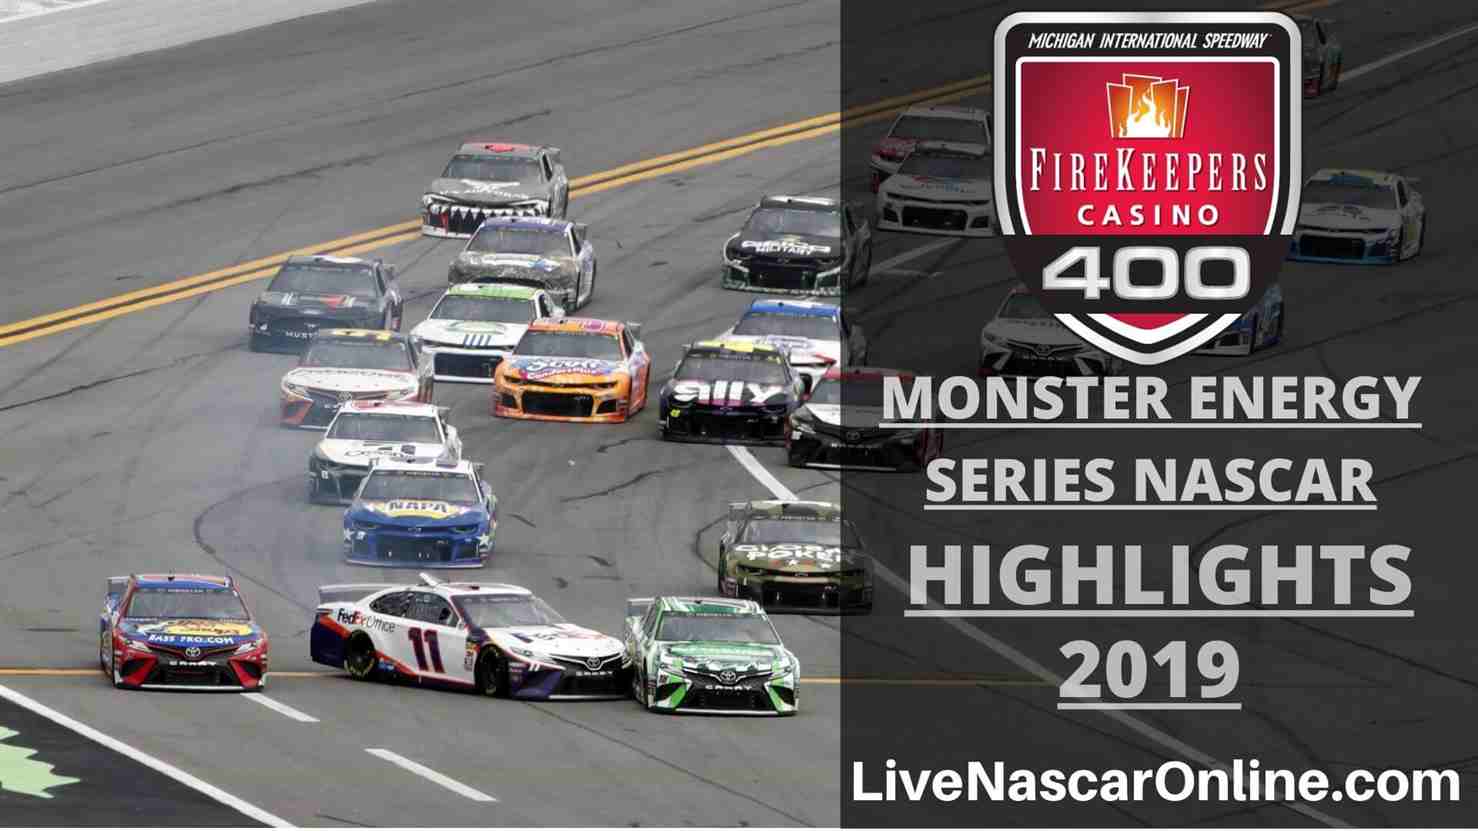 NASCAR Monster Energy FIREKEEPERS CASINO 400 Highlights 2019 Online